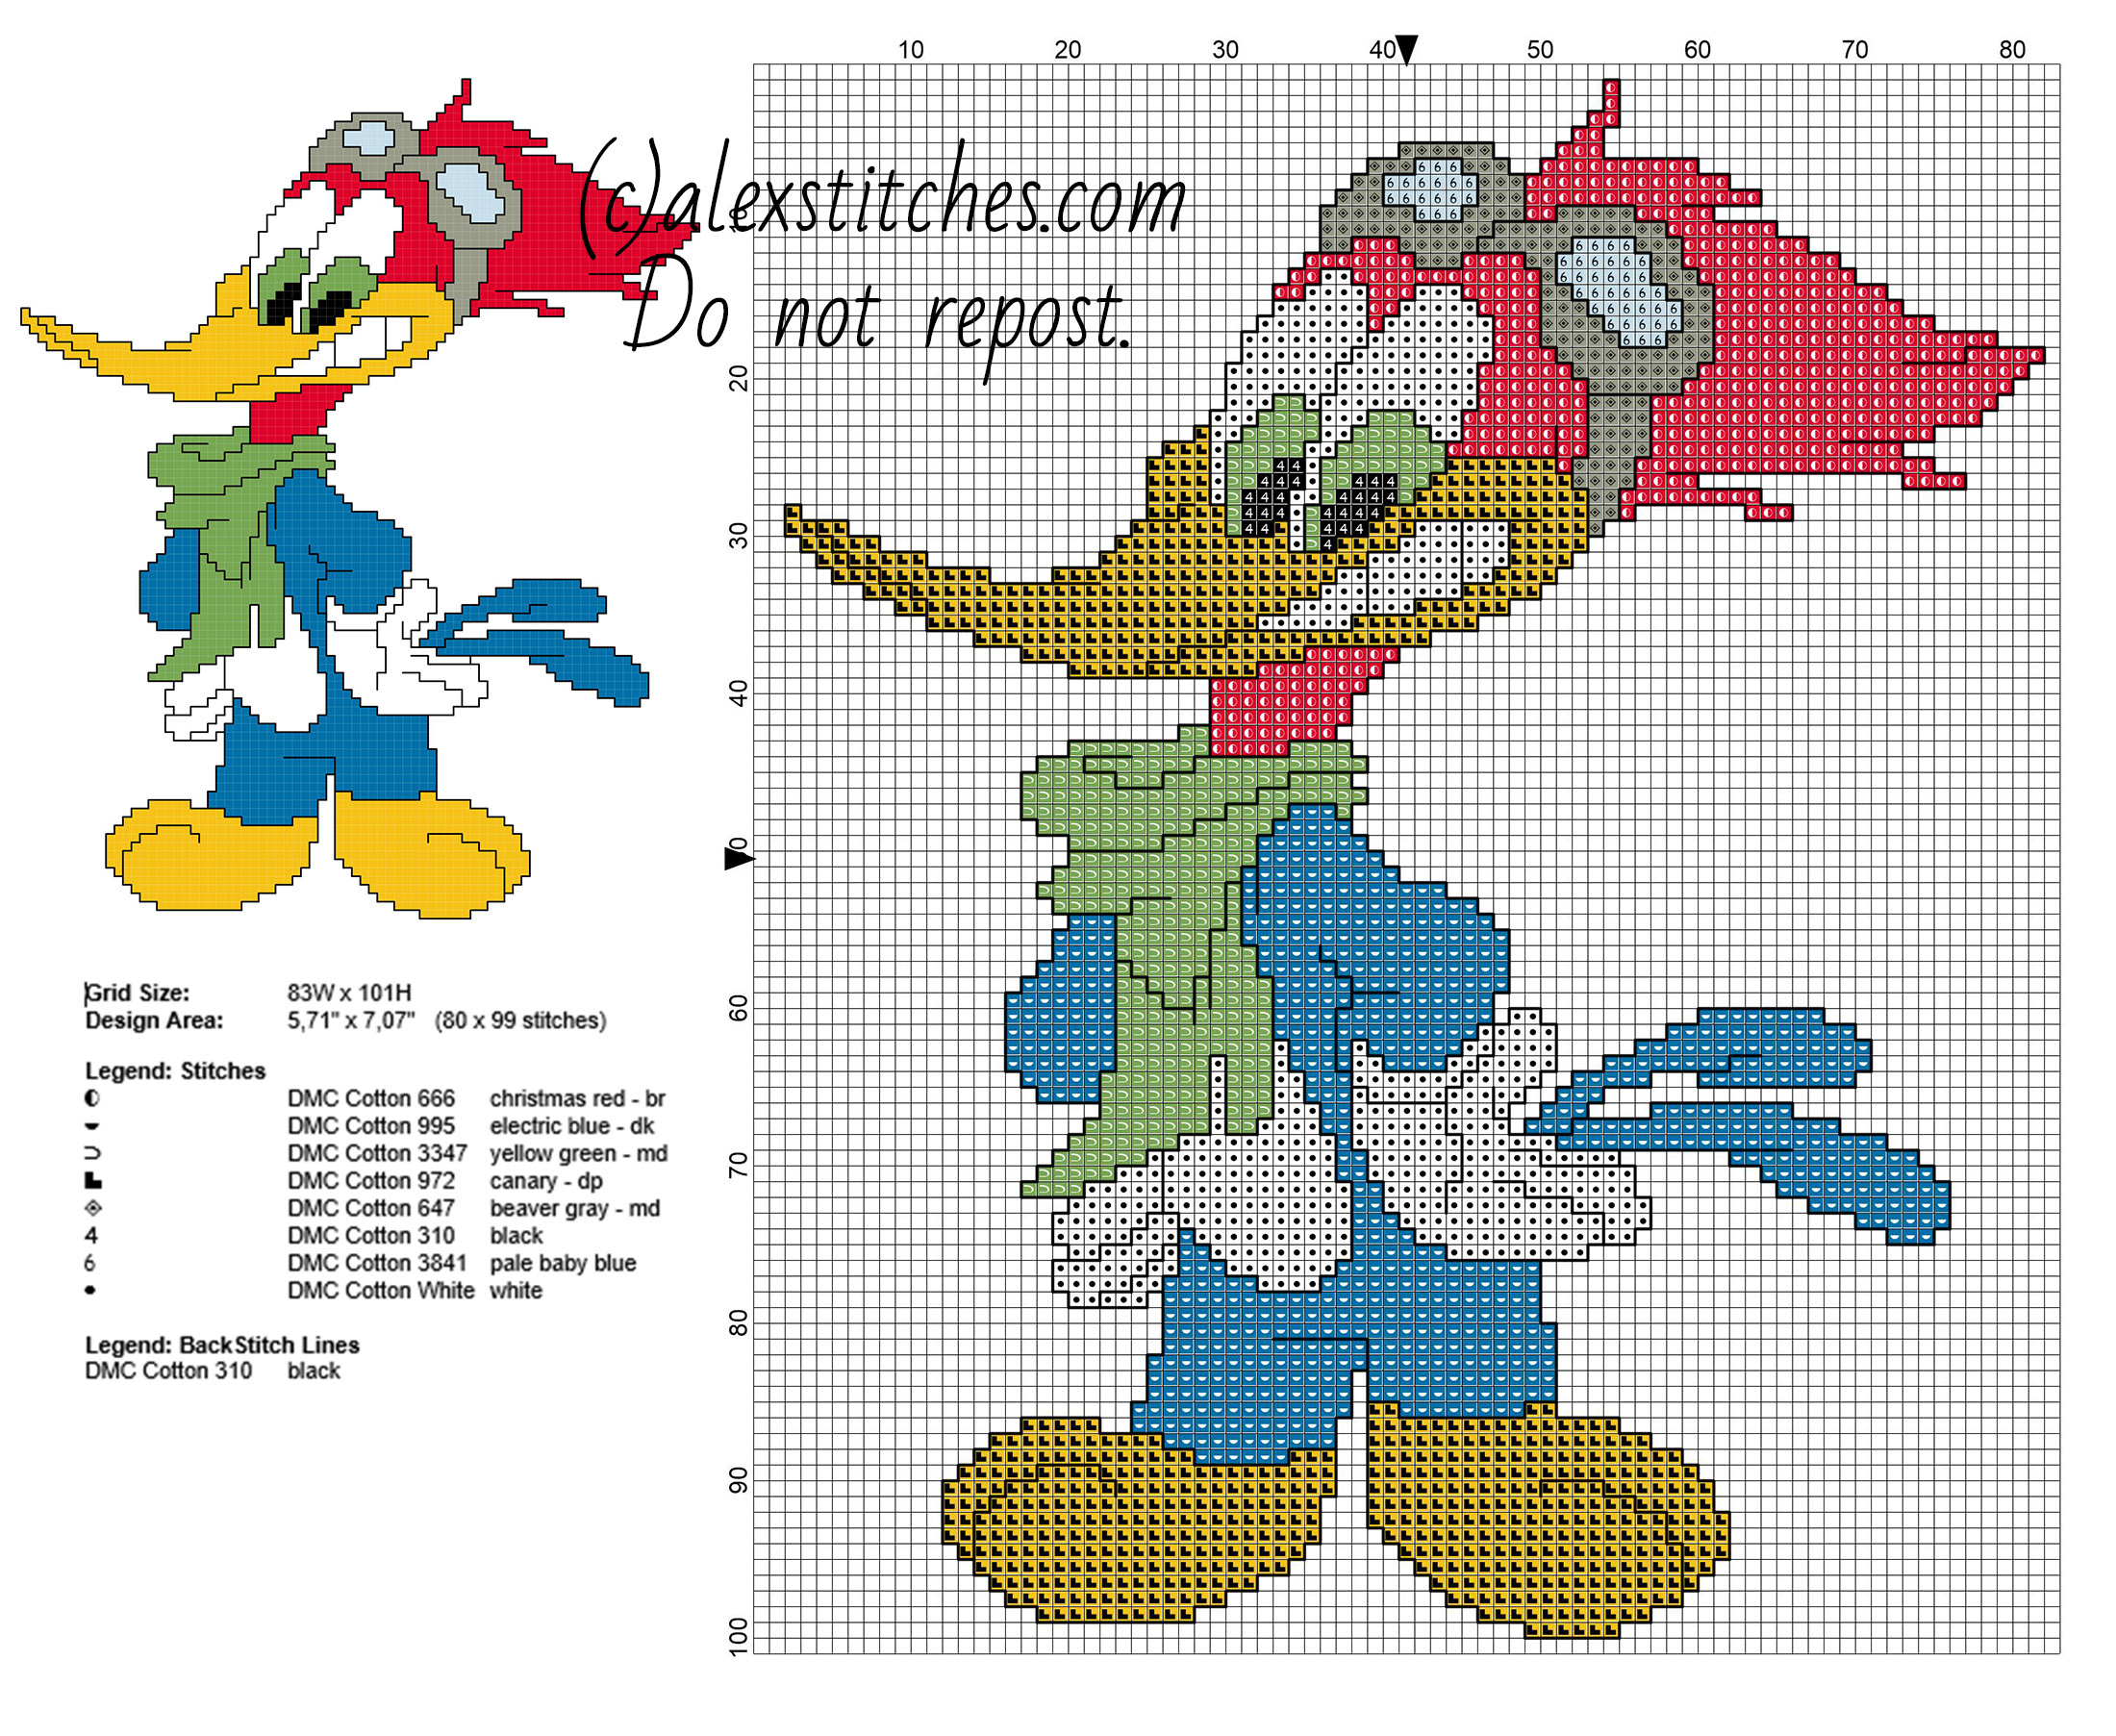 Woody Woodpecker cartoons free cross stitch pattern 80 x 99 stitches 8 DMC threads